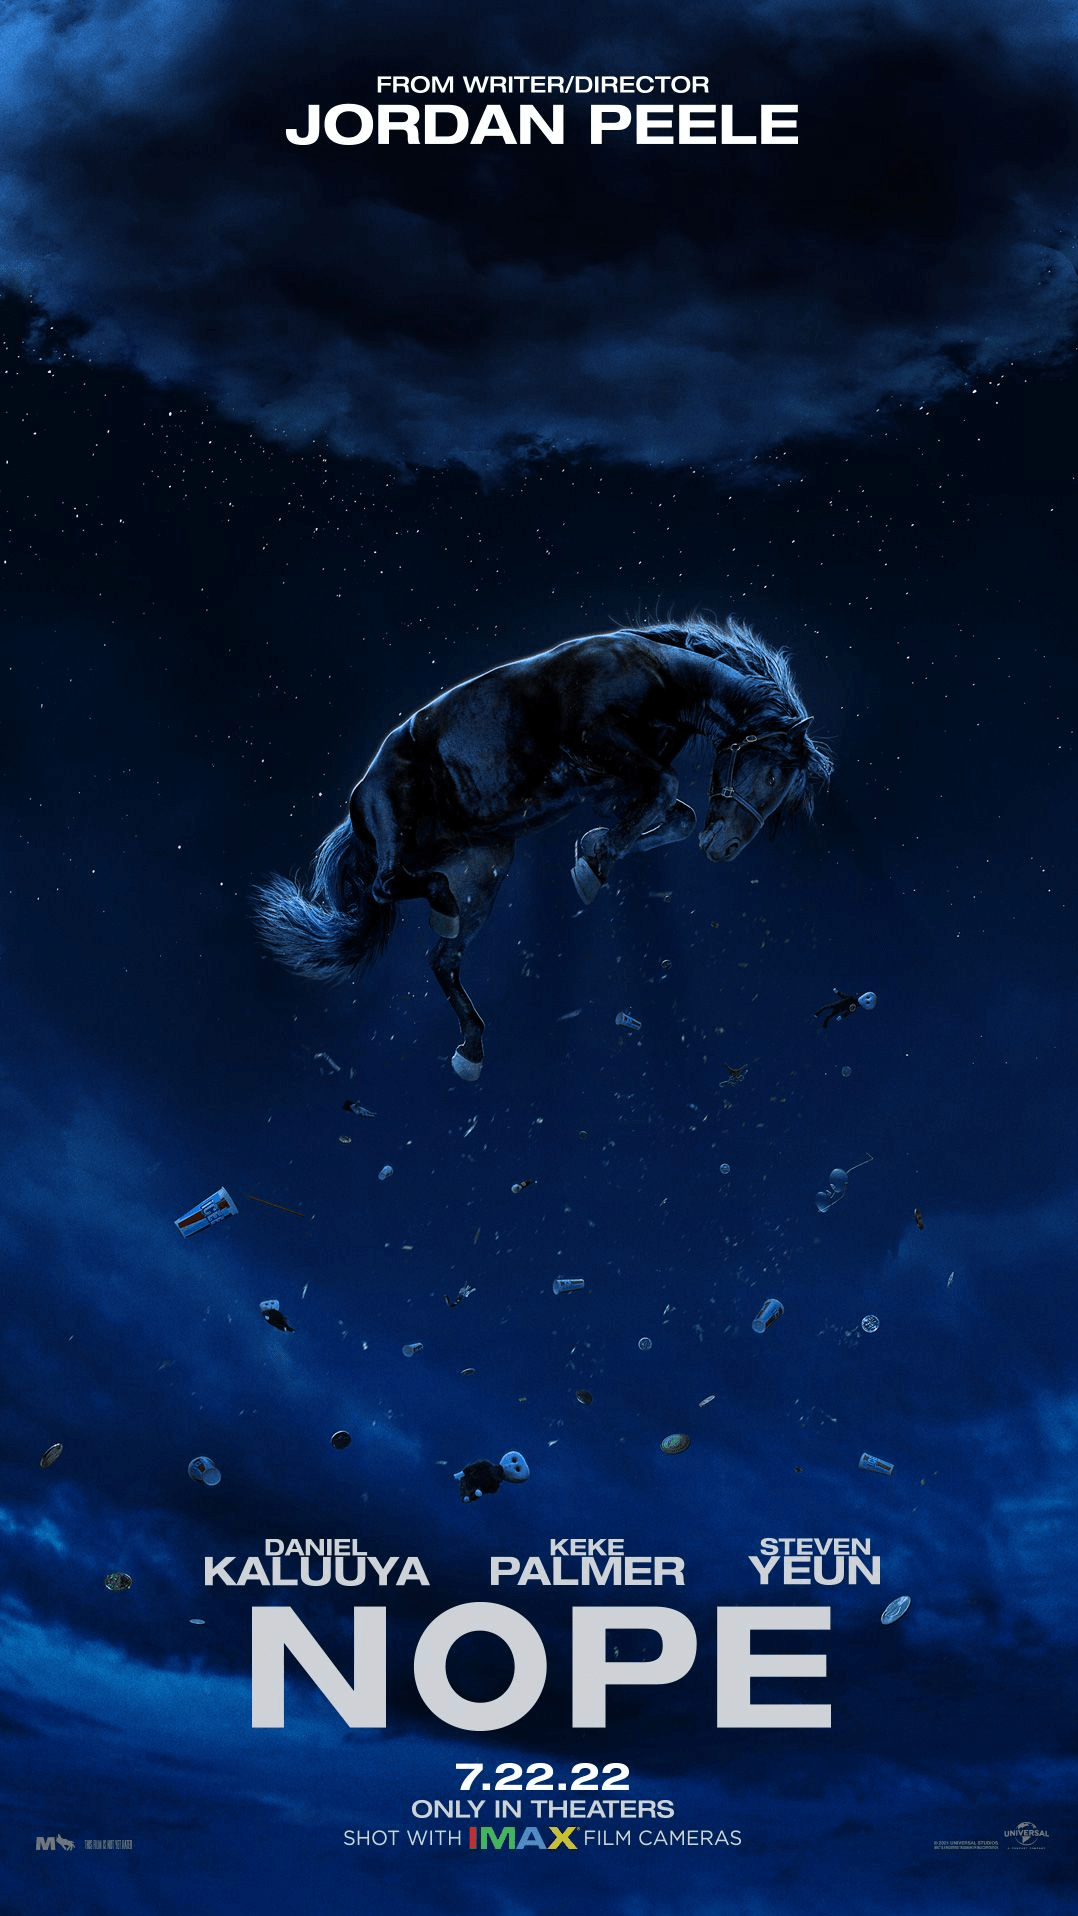 Jordan Peele NOPE Poster Sends a Horse into the Night Skies